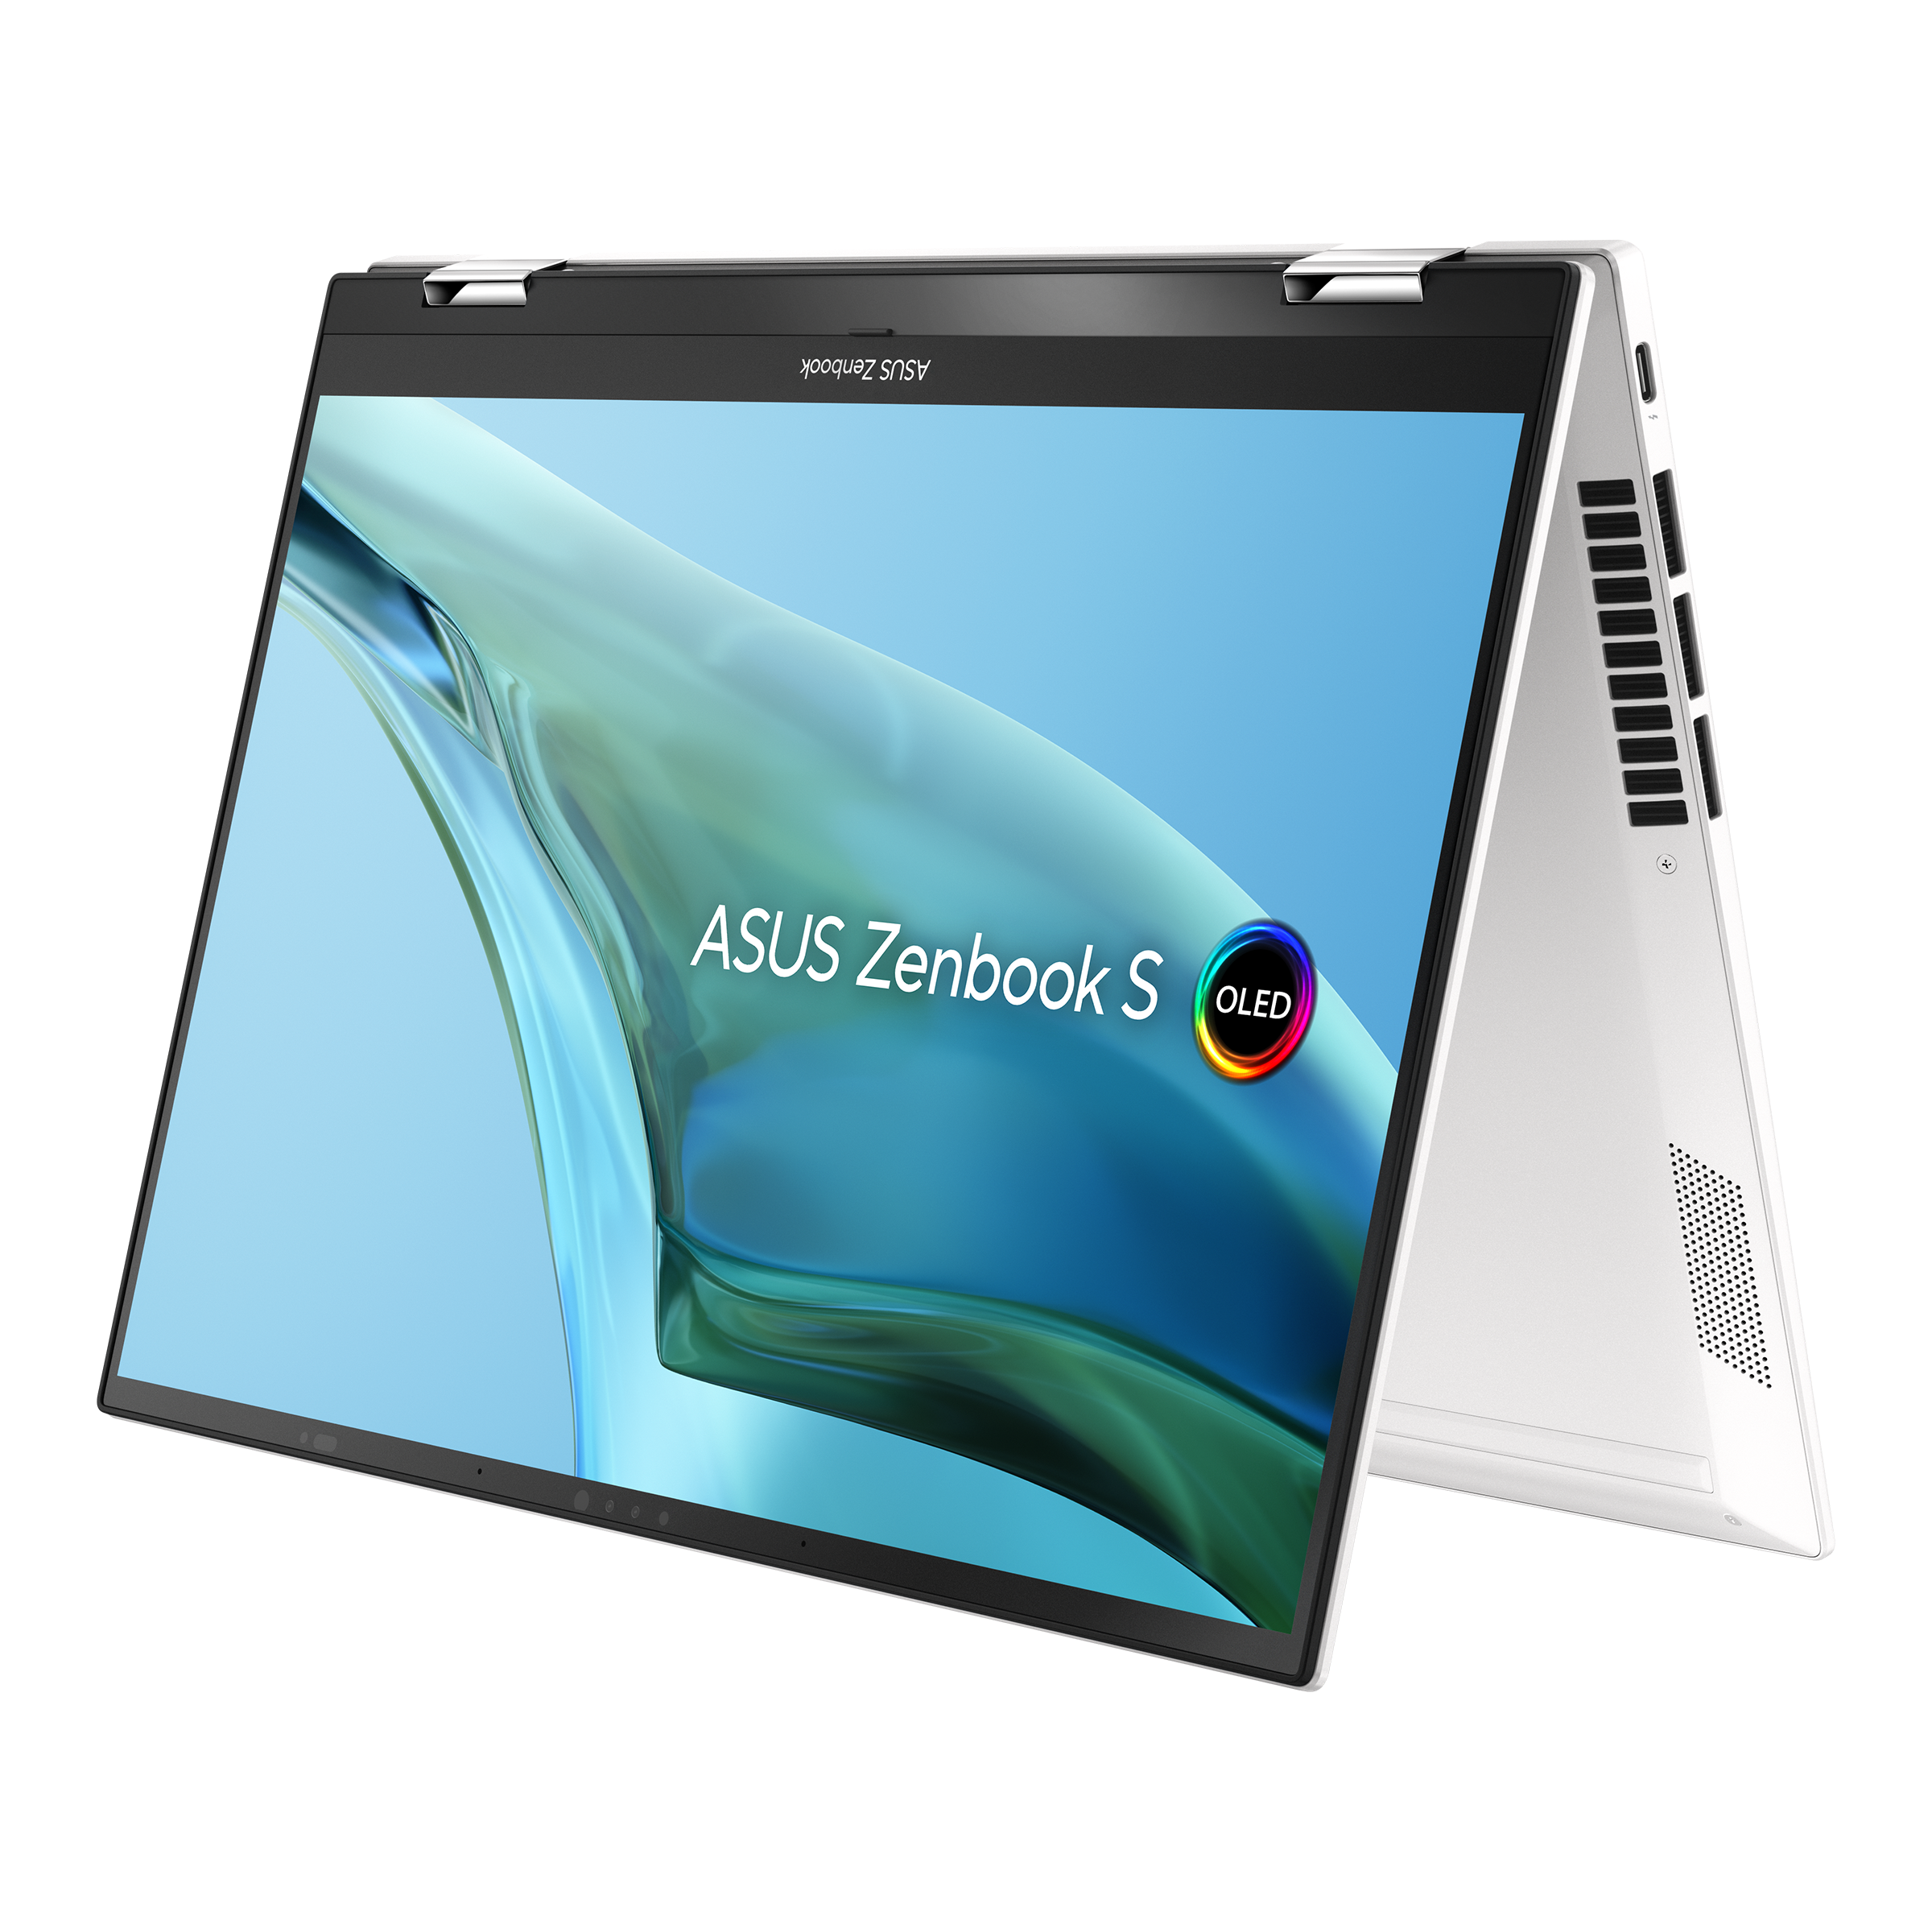 Zenbook S 13 Flip OLED (UP5302, 12th Gen Intel) - Tech Specs 